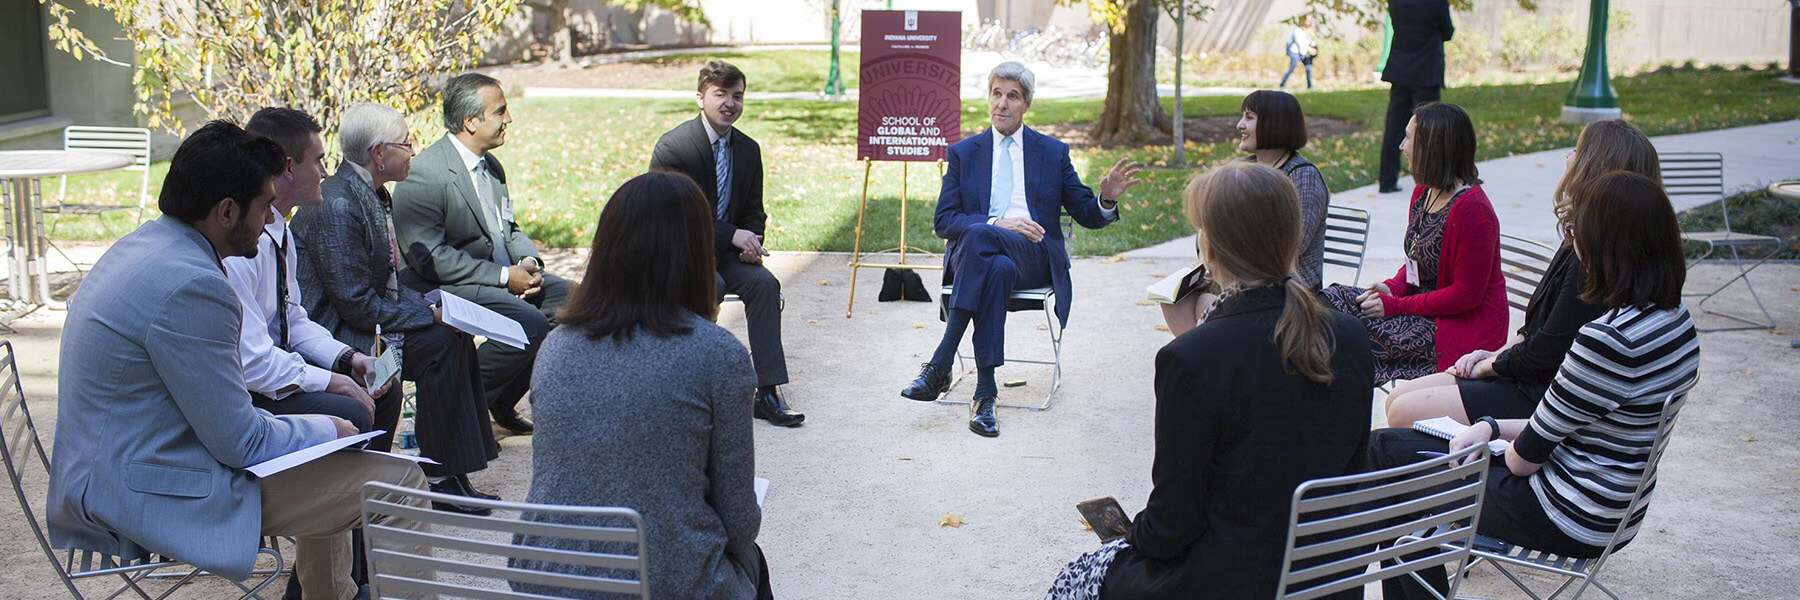 John Kerry and students talk at Indiana University